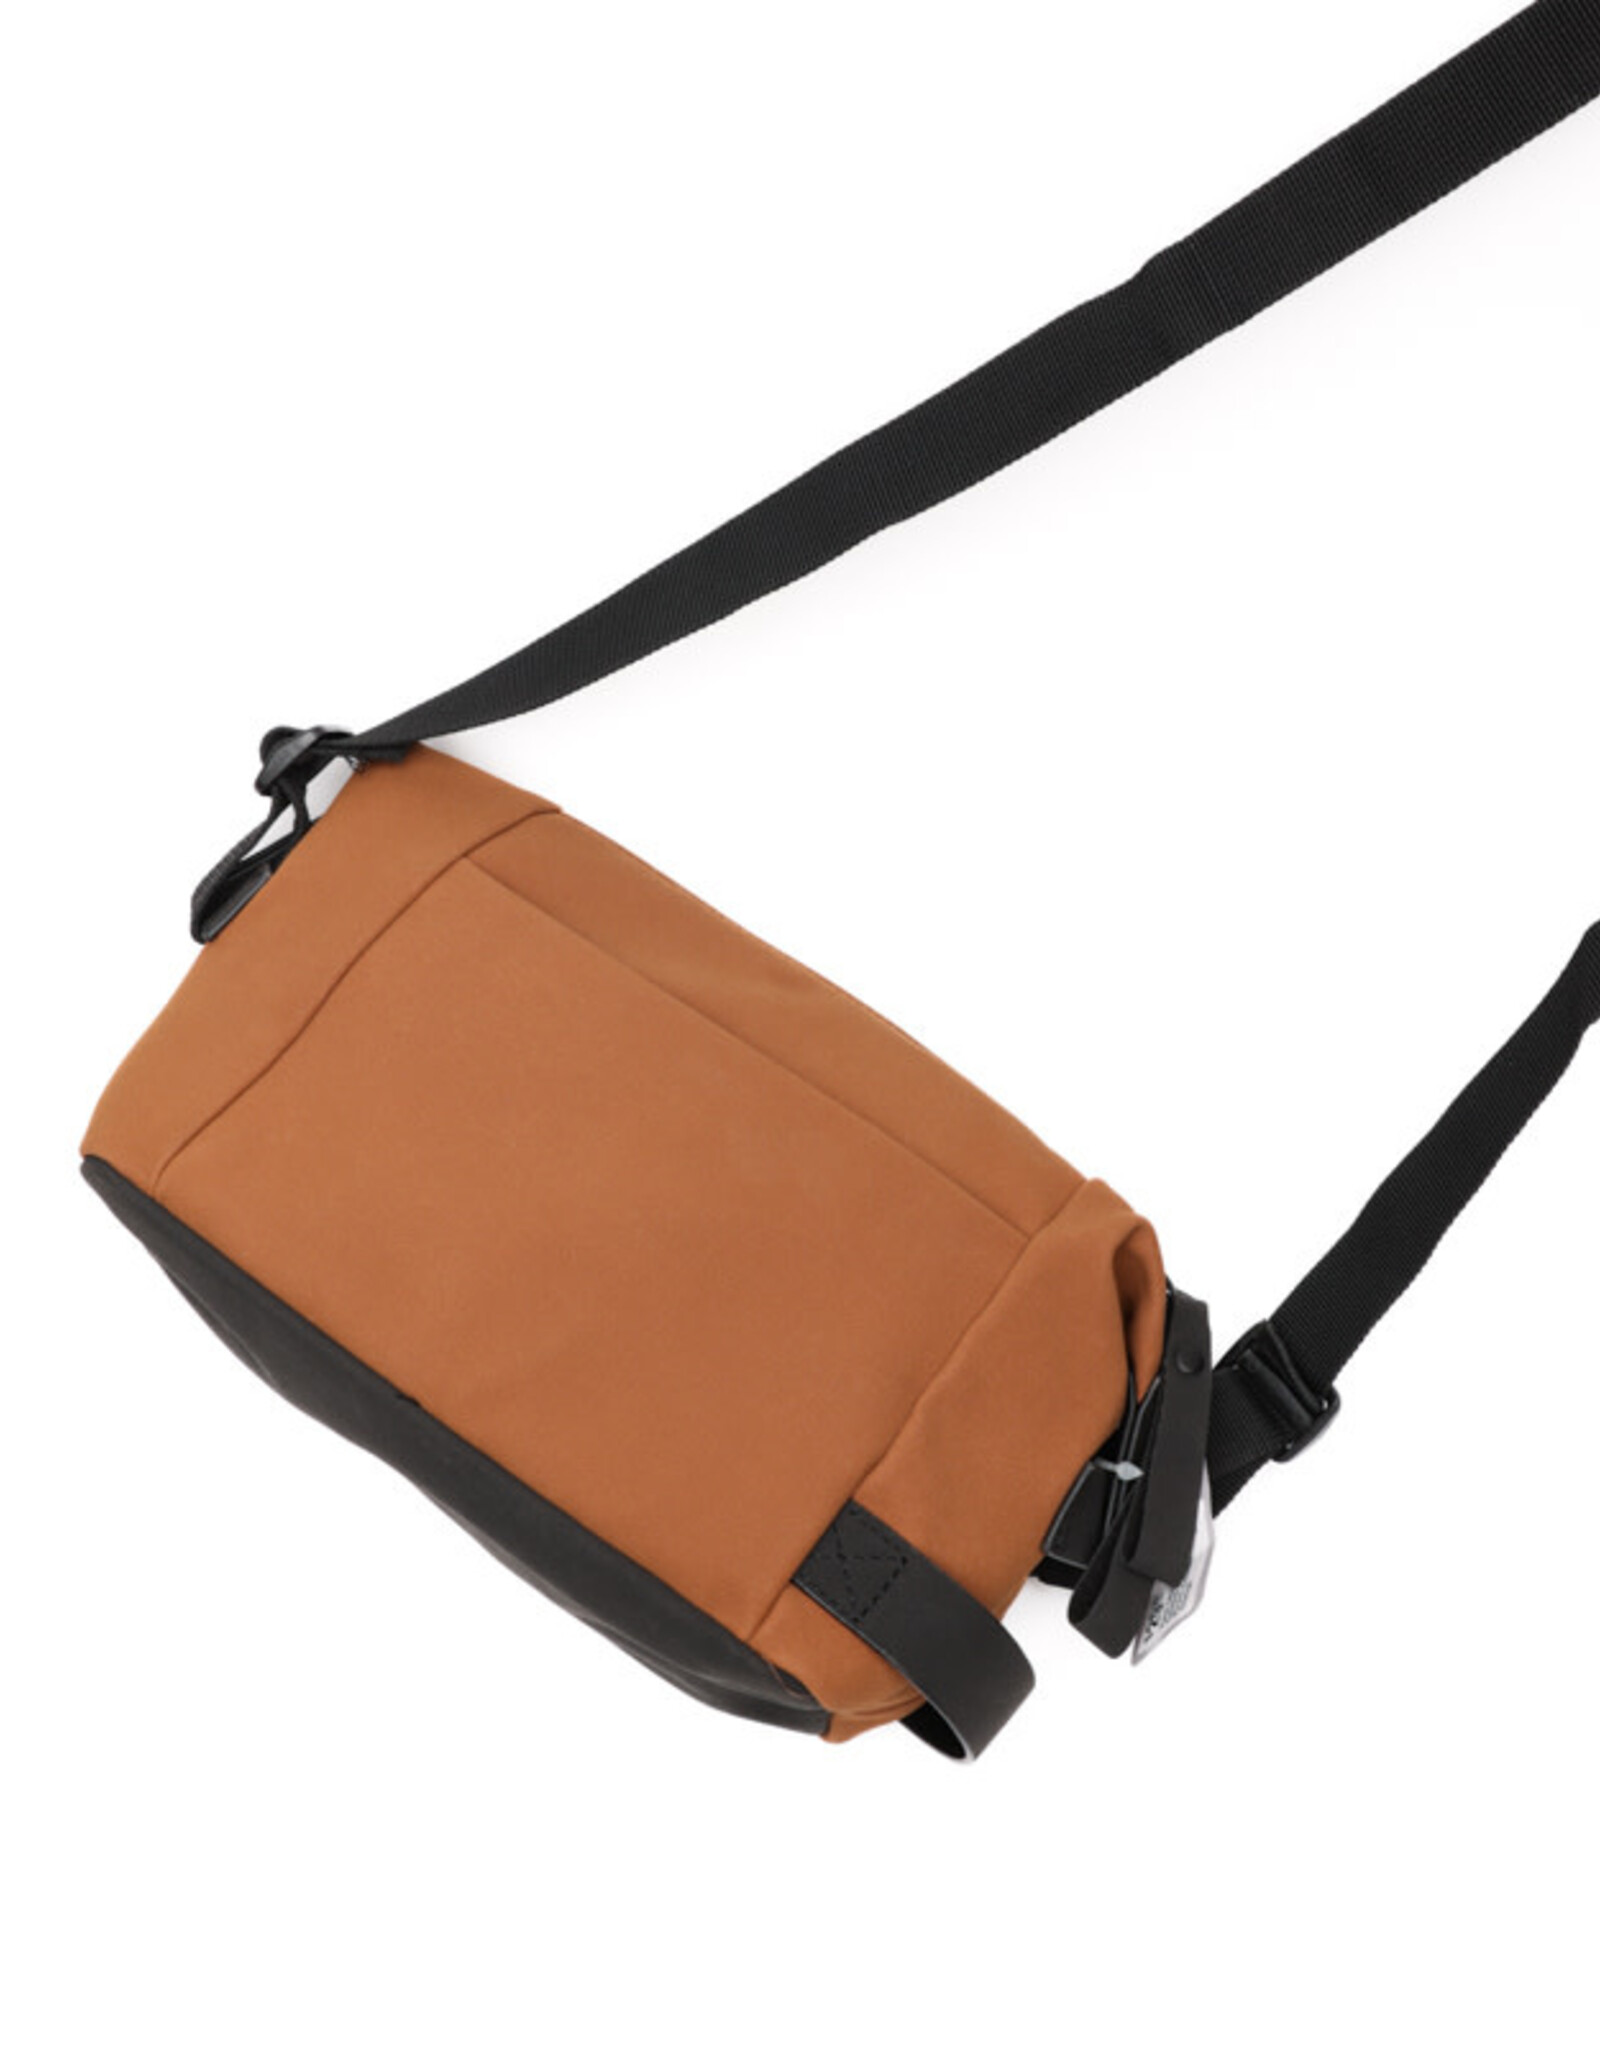 Nikon Faux Leather Camera Bag Pouch Autumn Orange